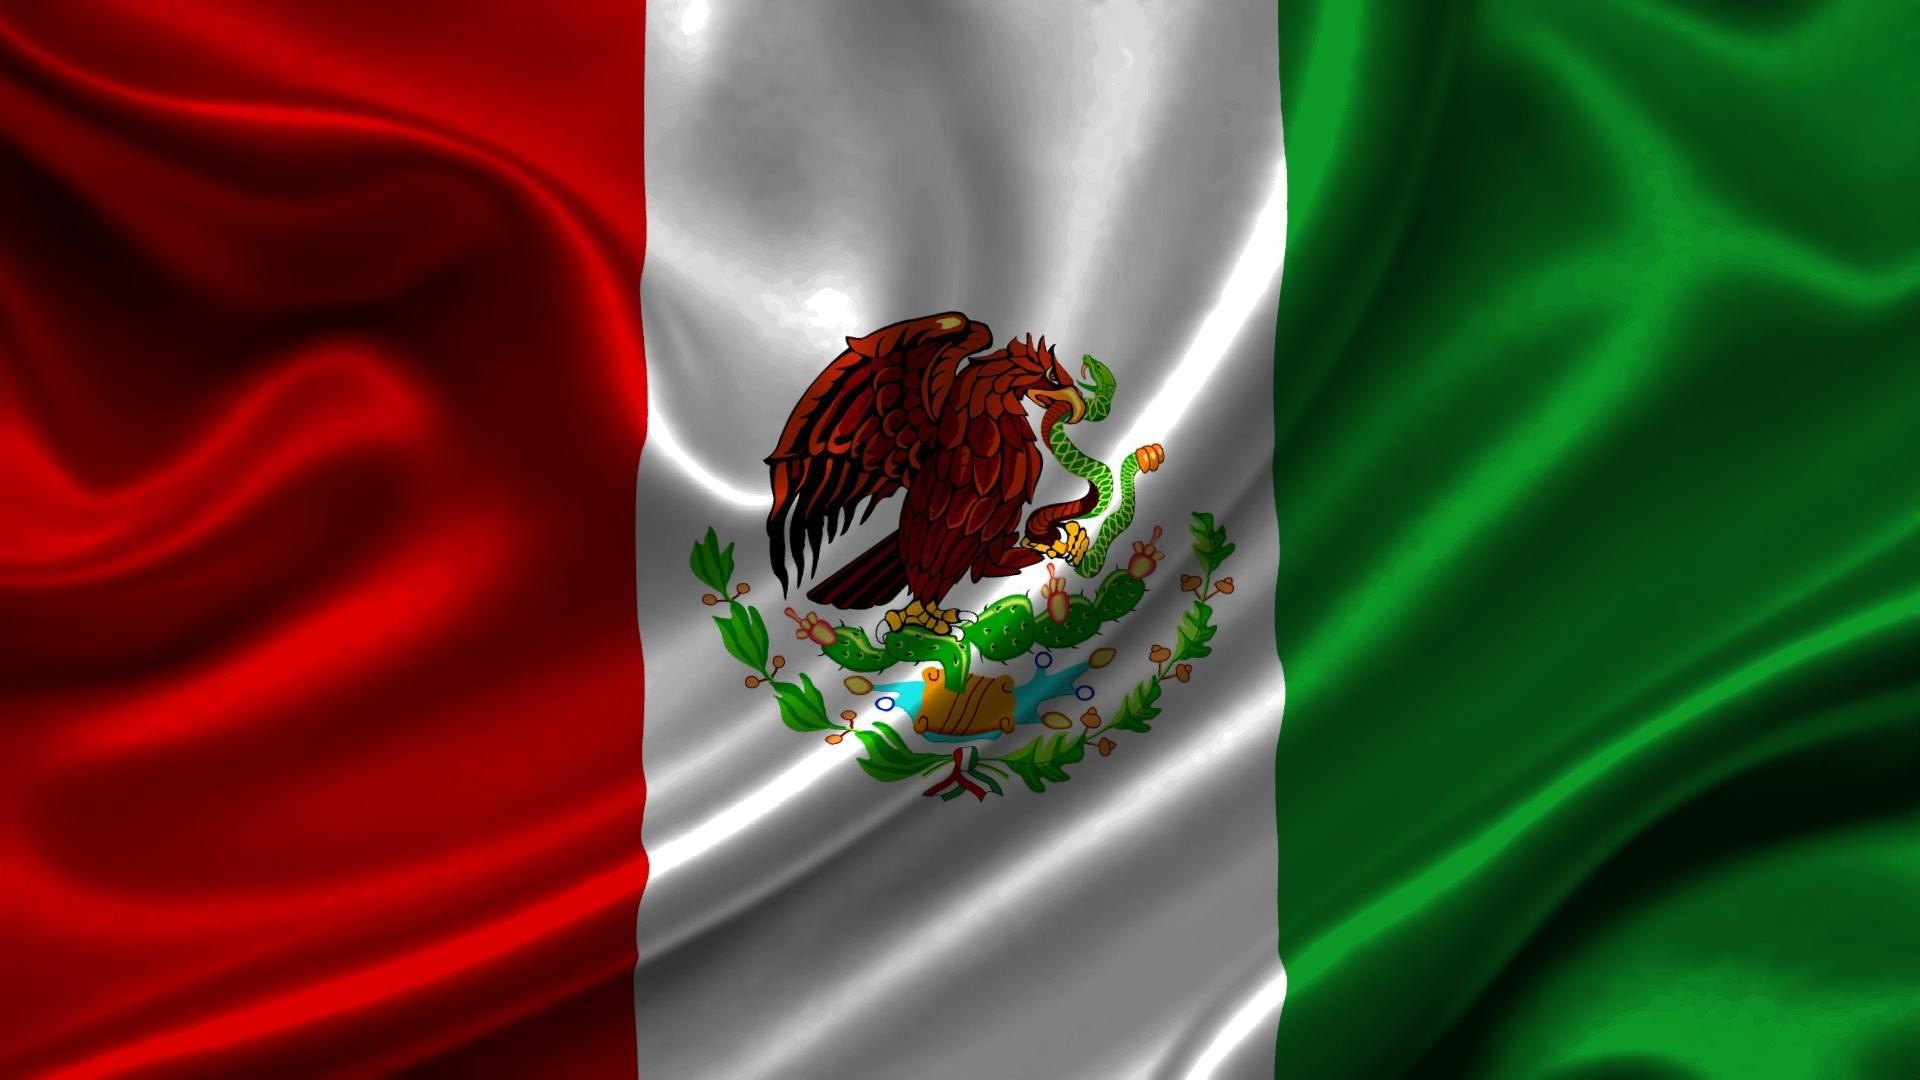 carta da parati messicana,bandiera,verde,rosso,macrofotografia,fotografia